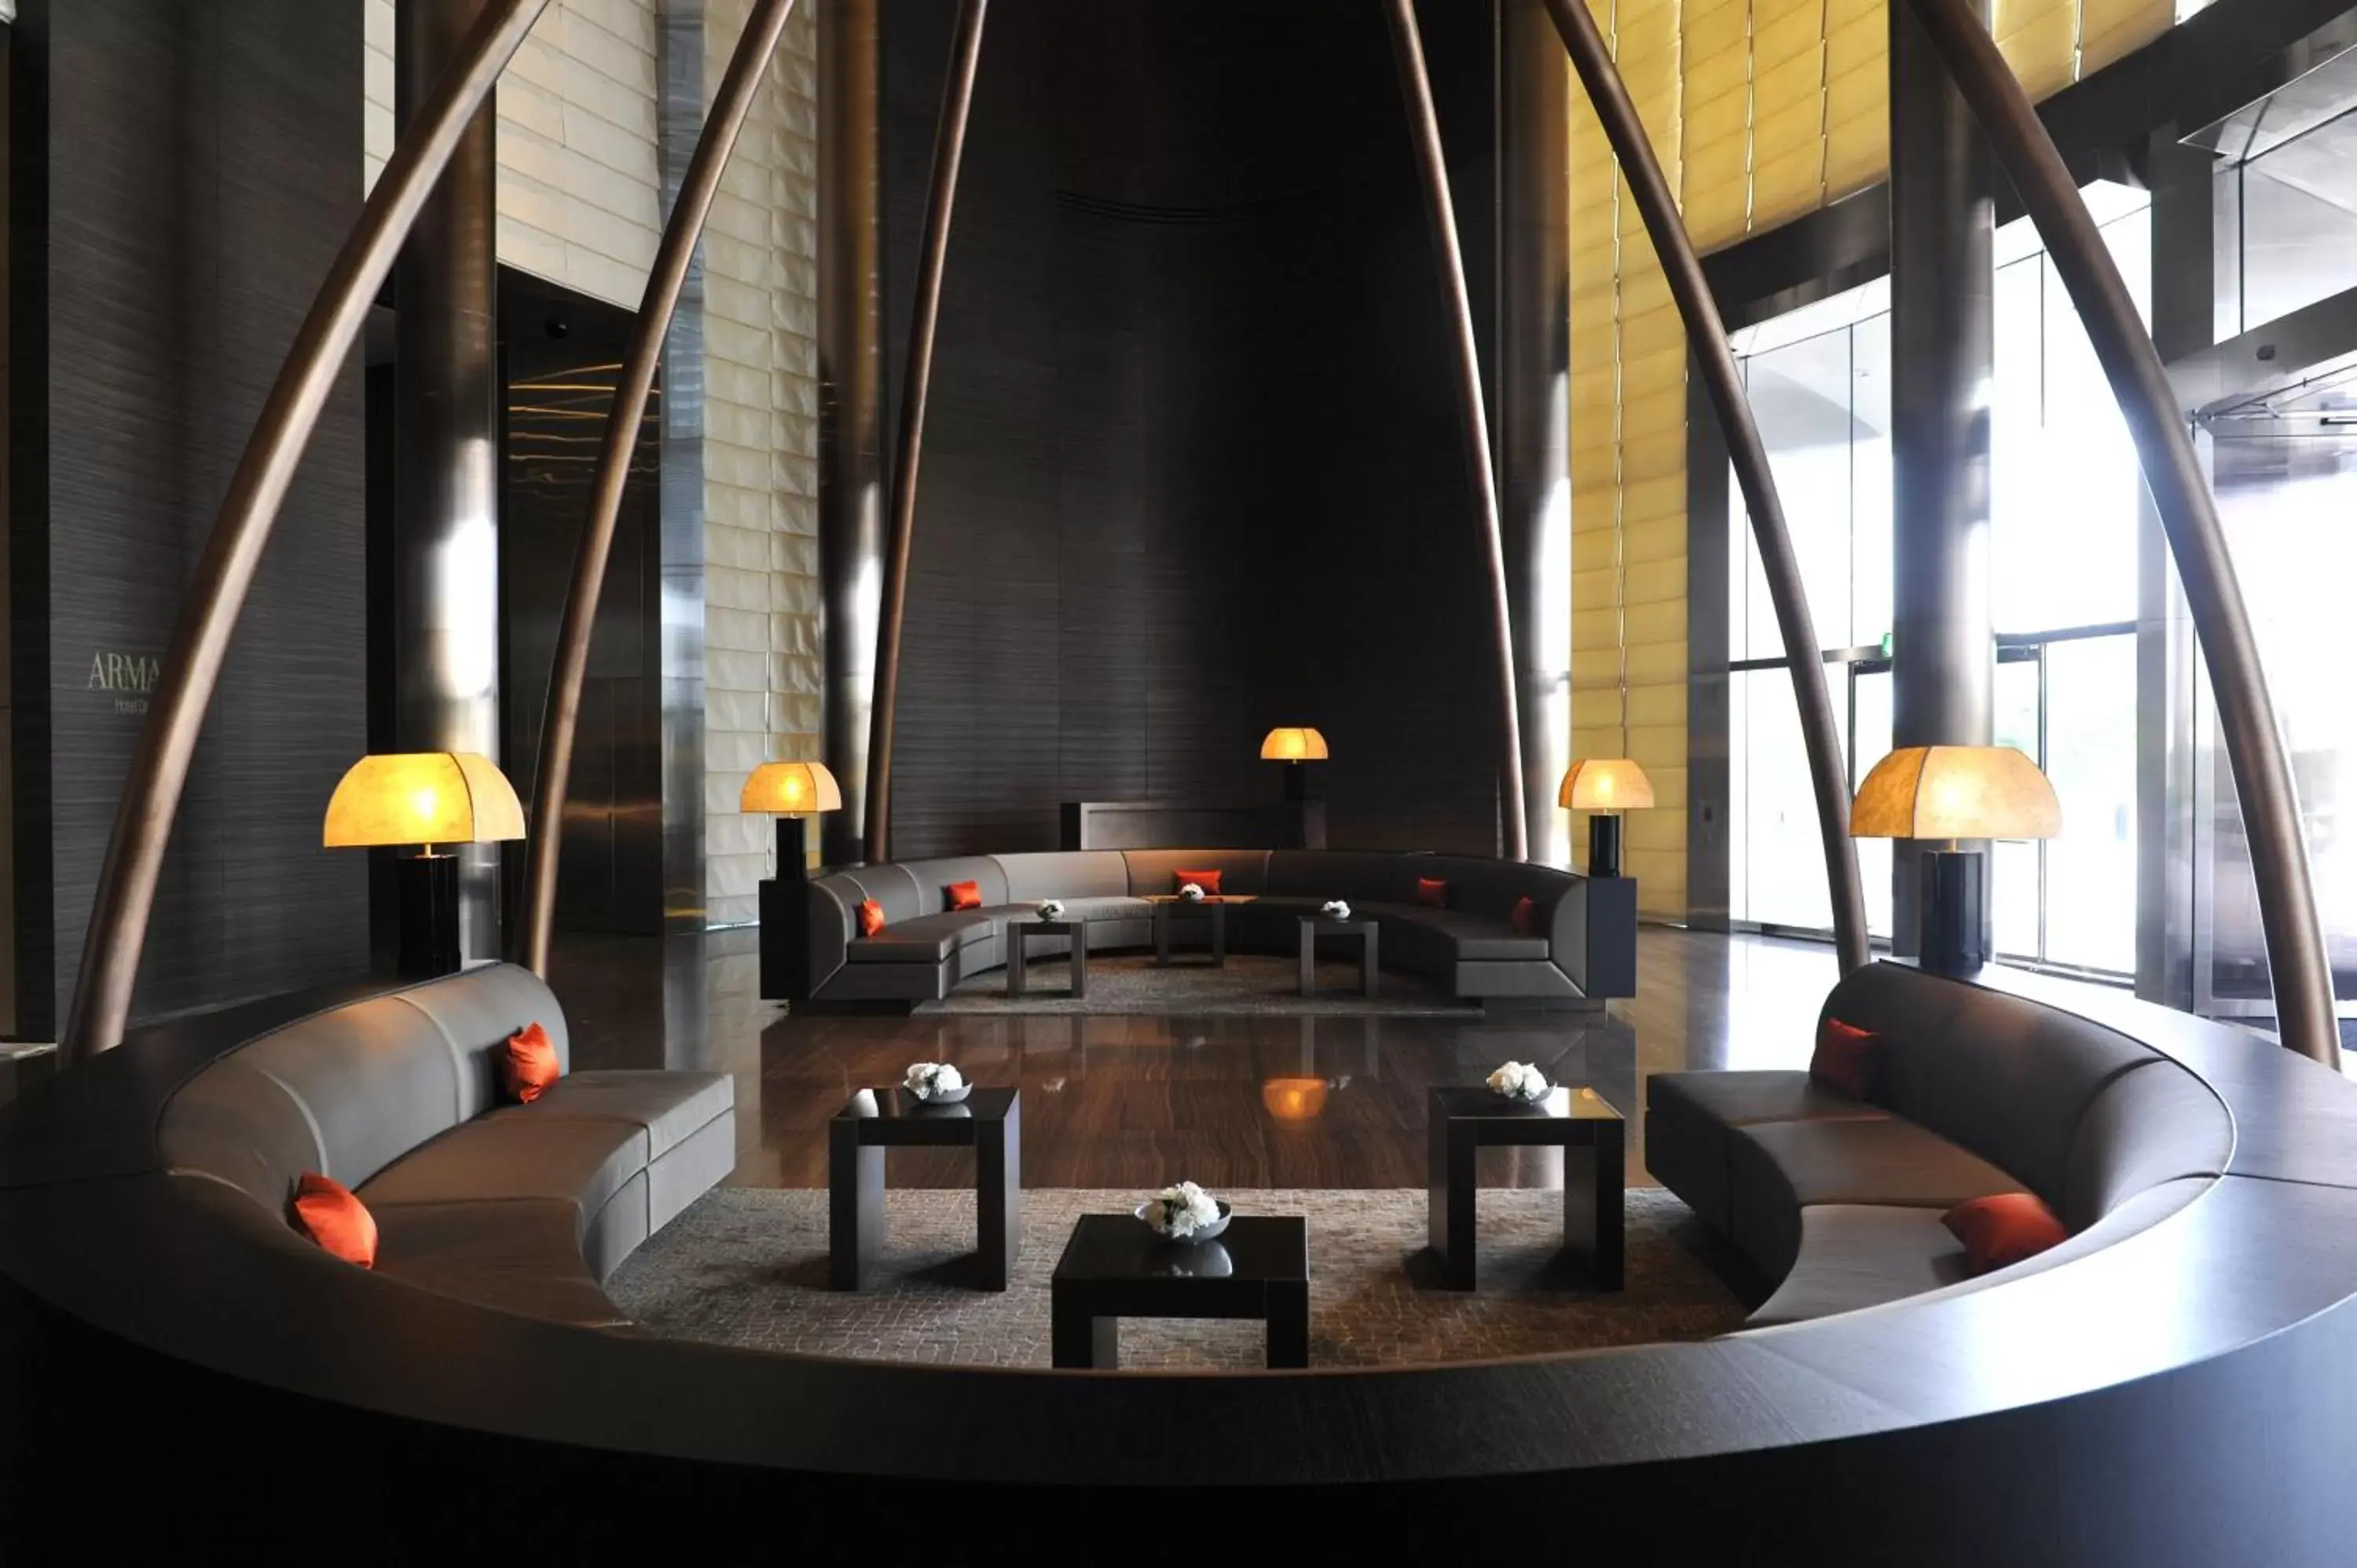 Lobby or reception in Armani Hotel Dubai